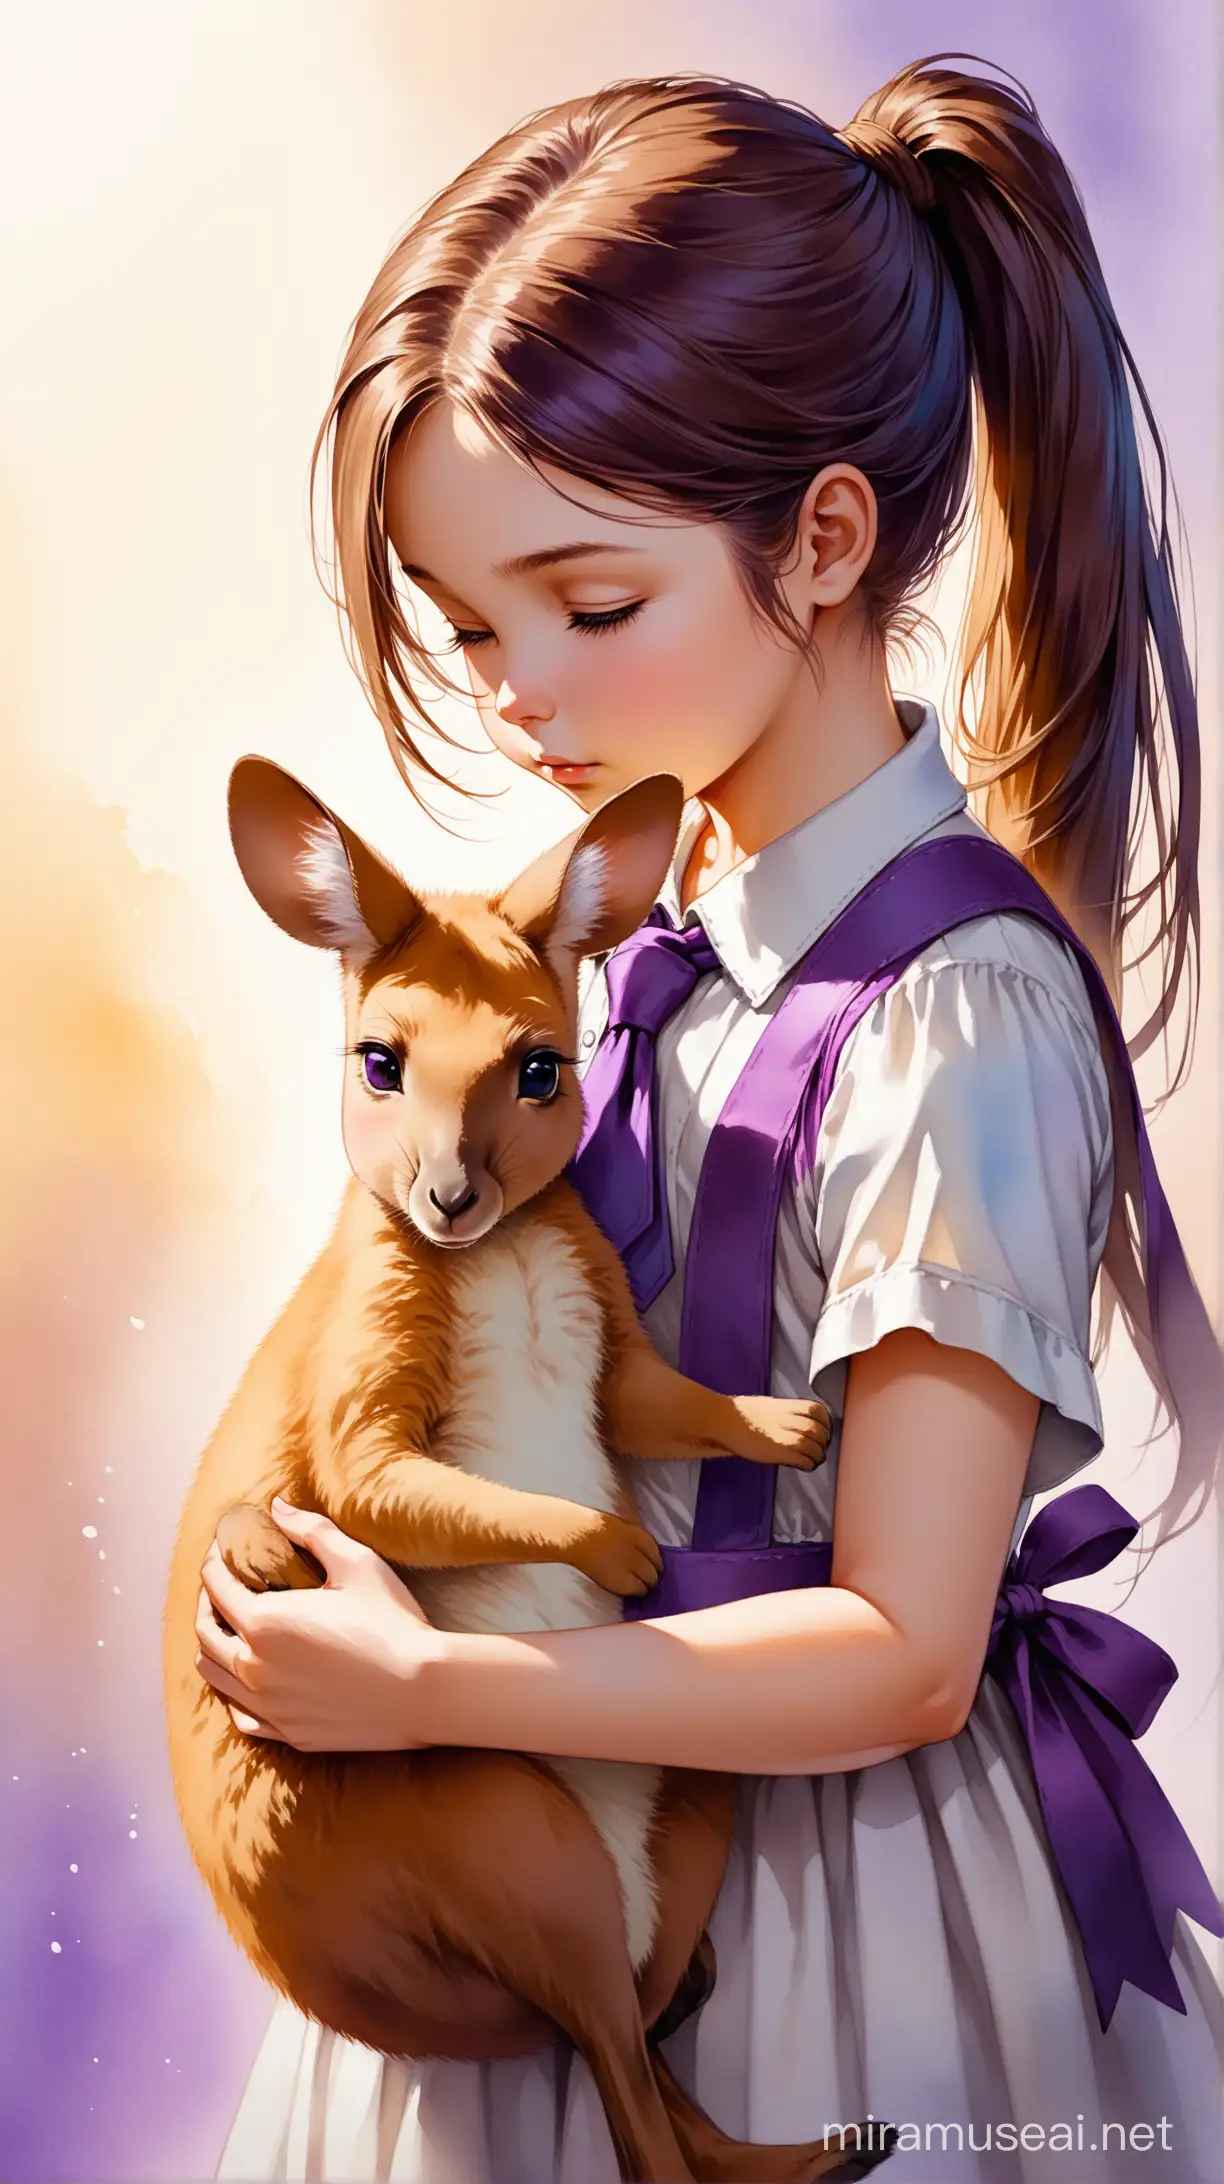 Adorable Little Girl Hugging Baby Kangaroo in Watercolor Art